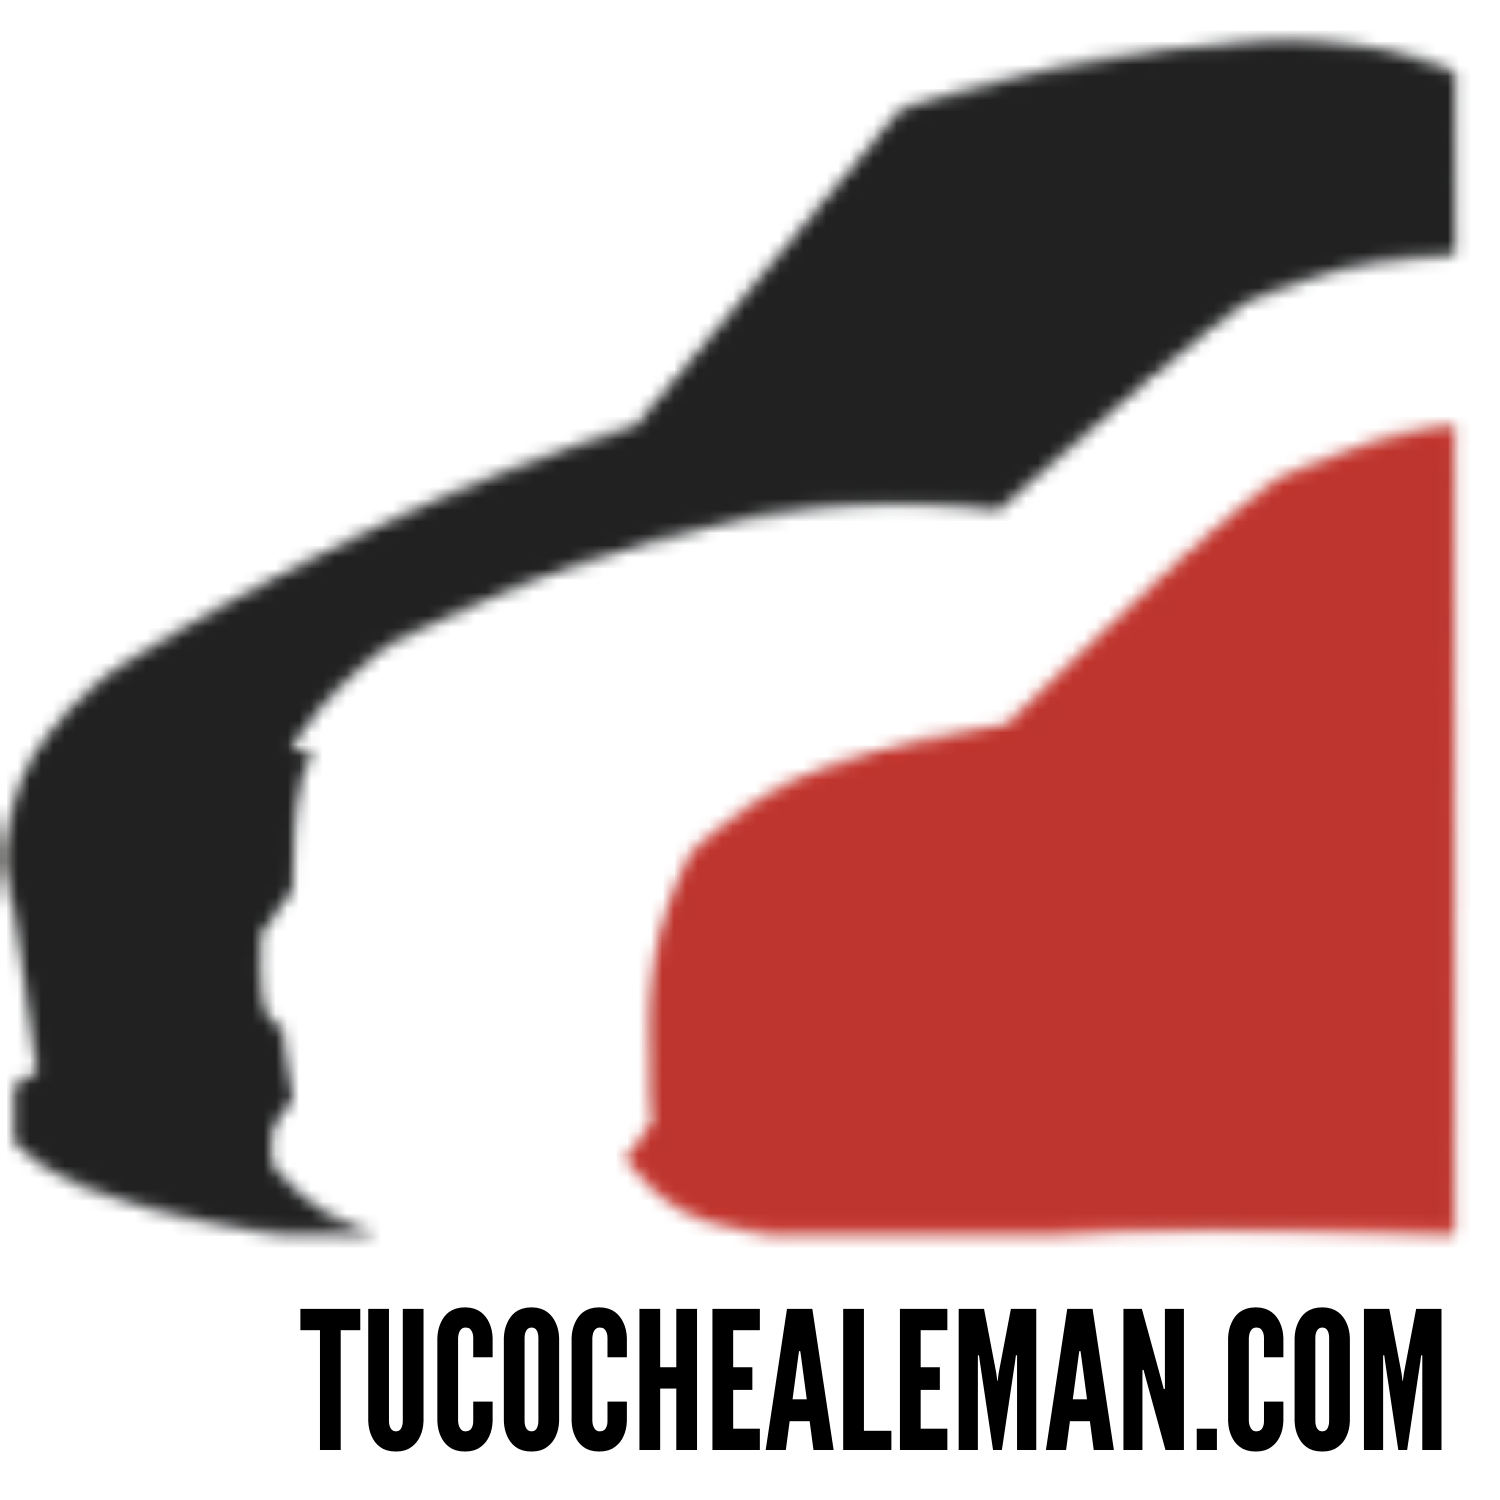 Tucochealeman.com Madrid